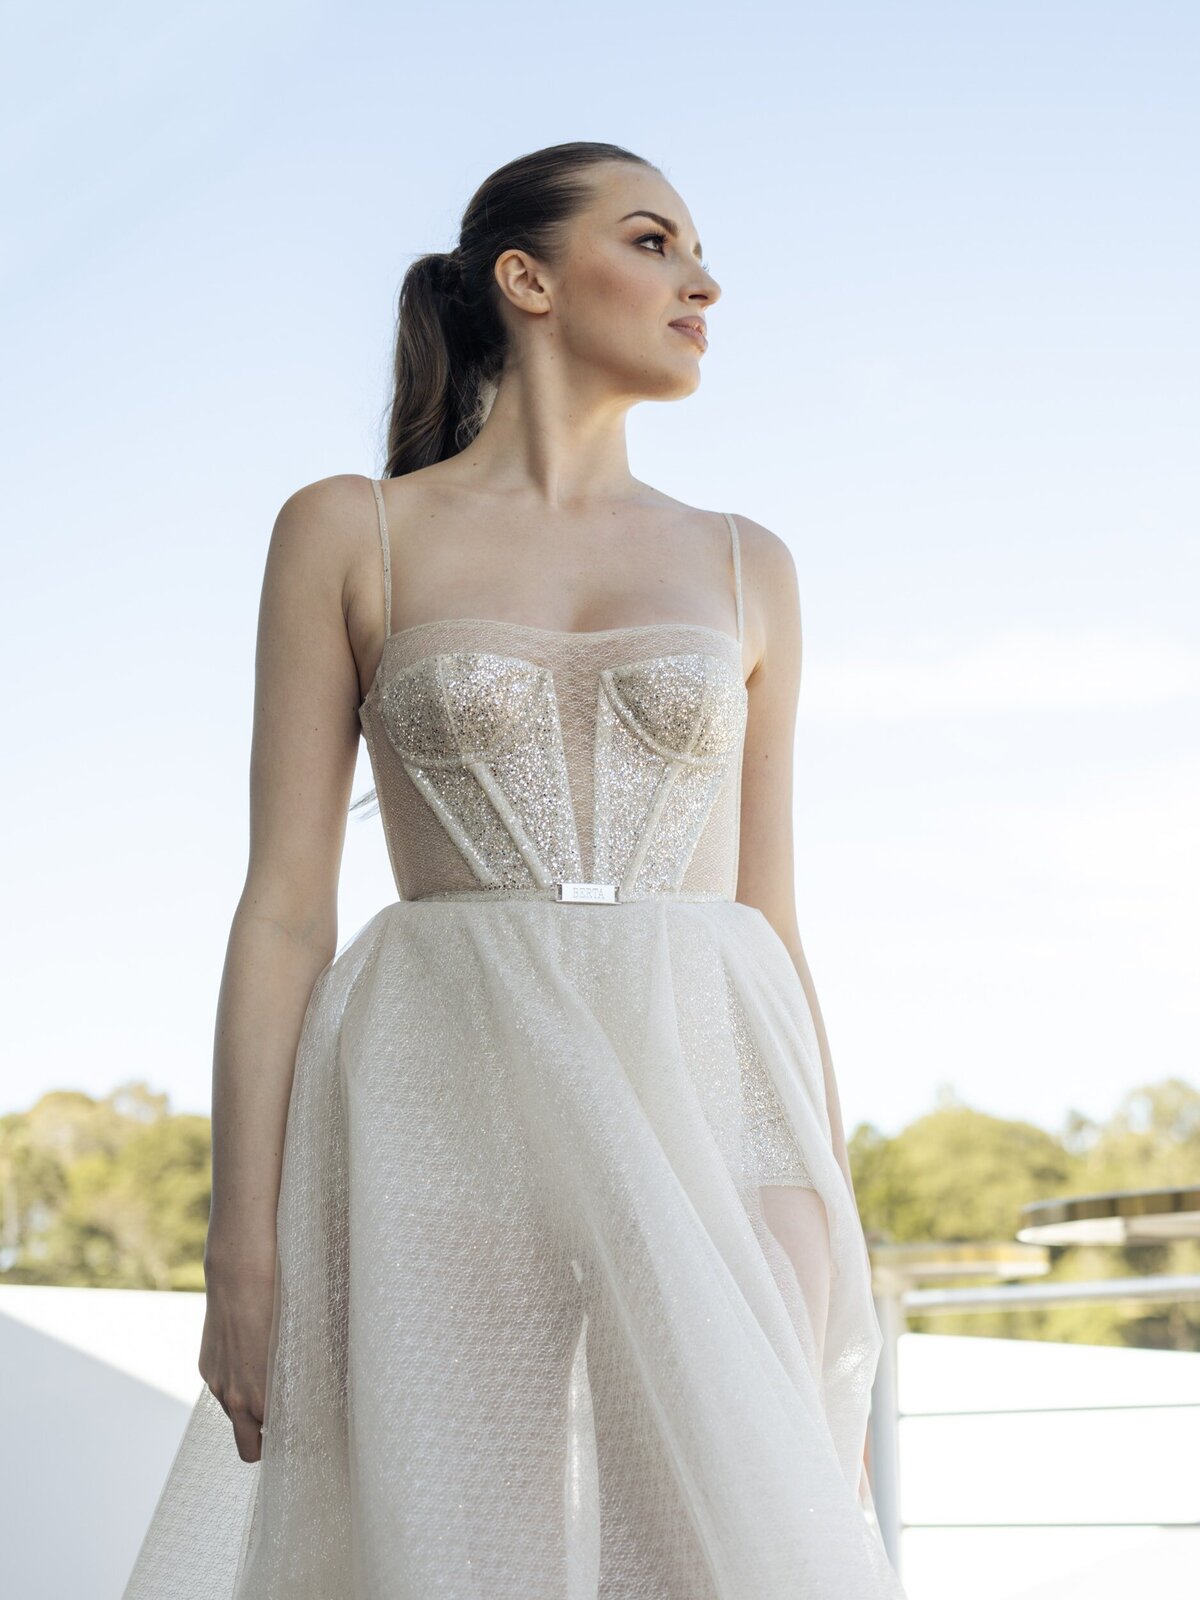 Muse by Berta wedding dress - Serenity Photography - 115